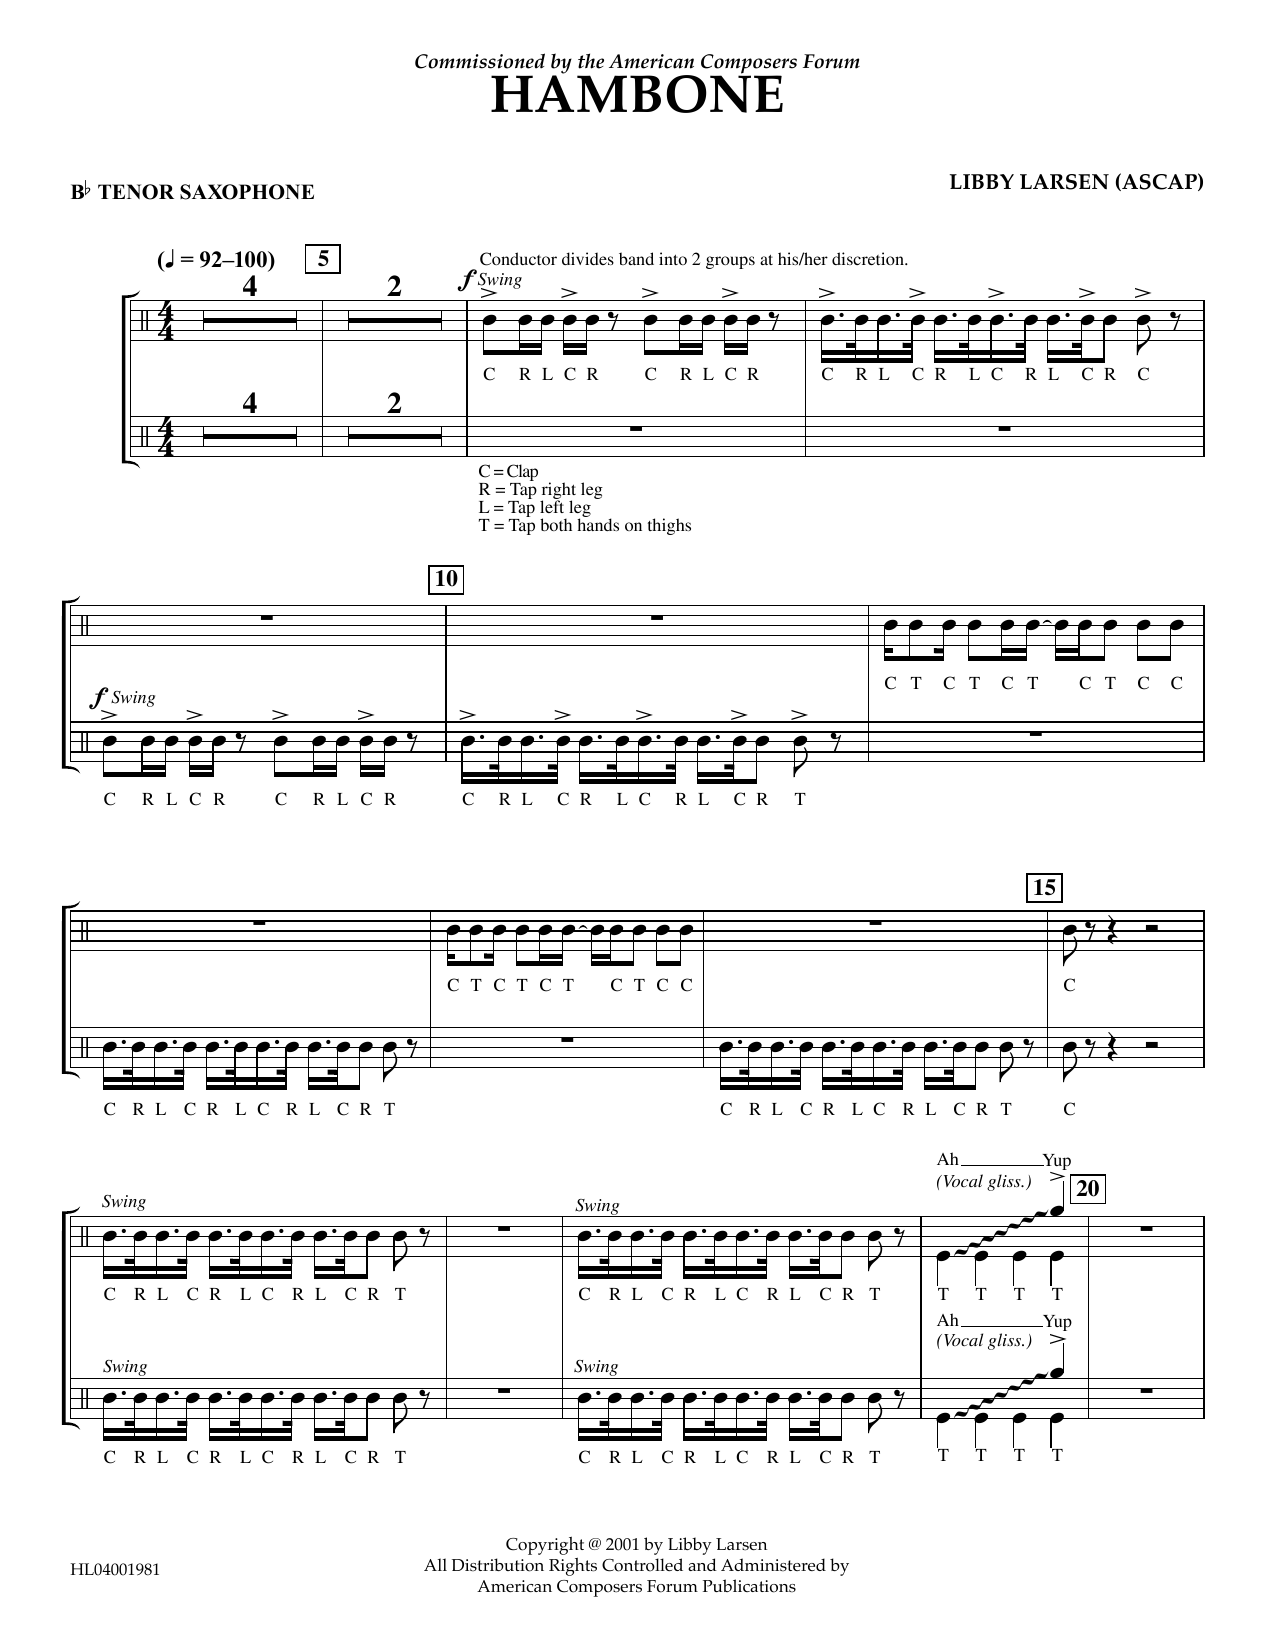 Libby Larsen Hambone - Bb Tenor Saxophone Sheet Music Notes & Chords for Concert Band - Download or Print PDF